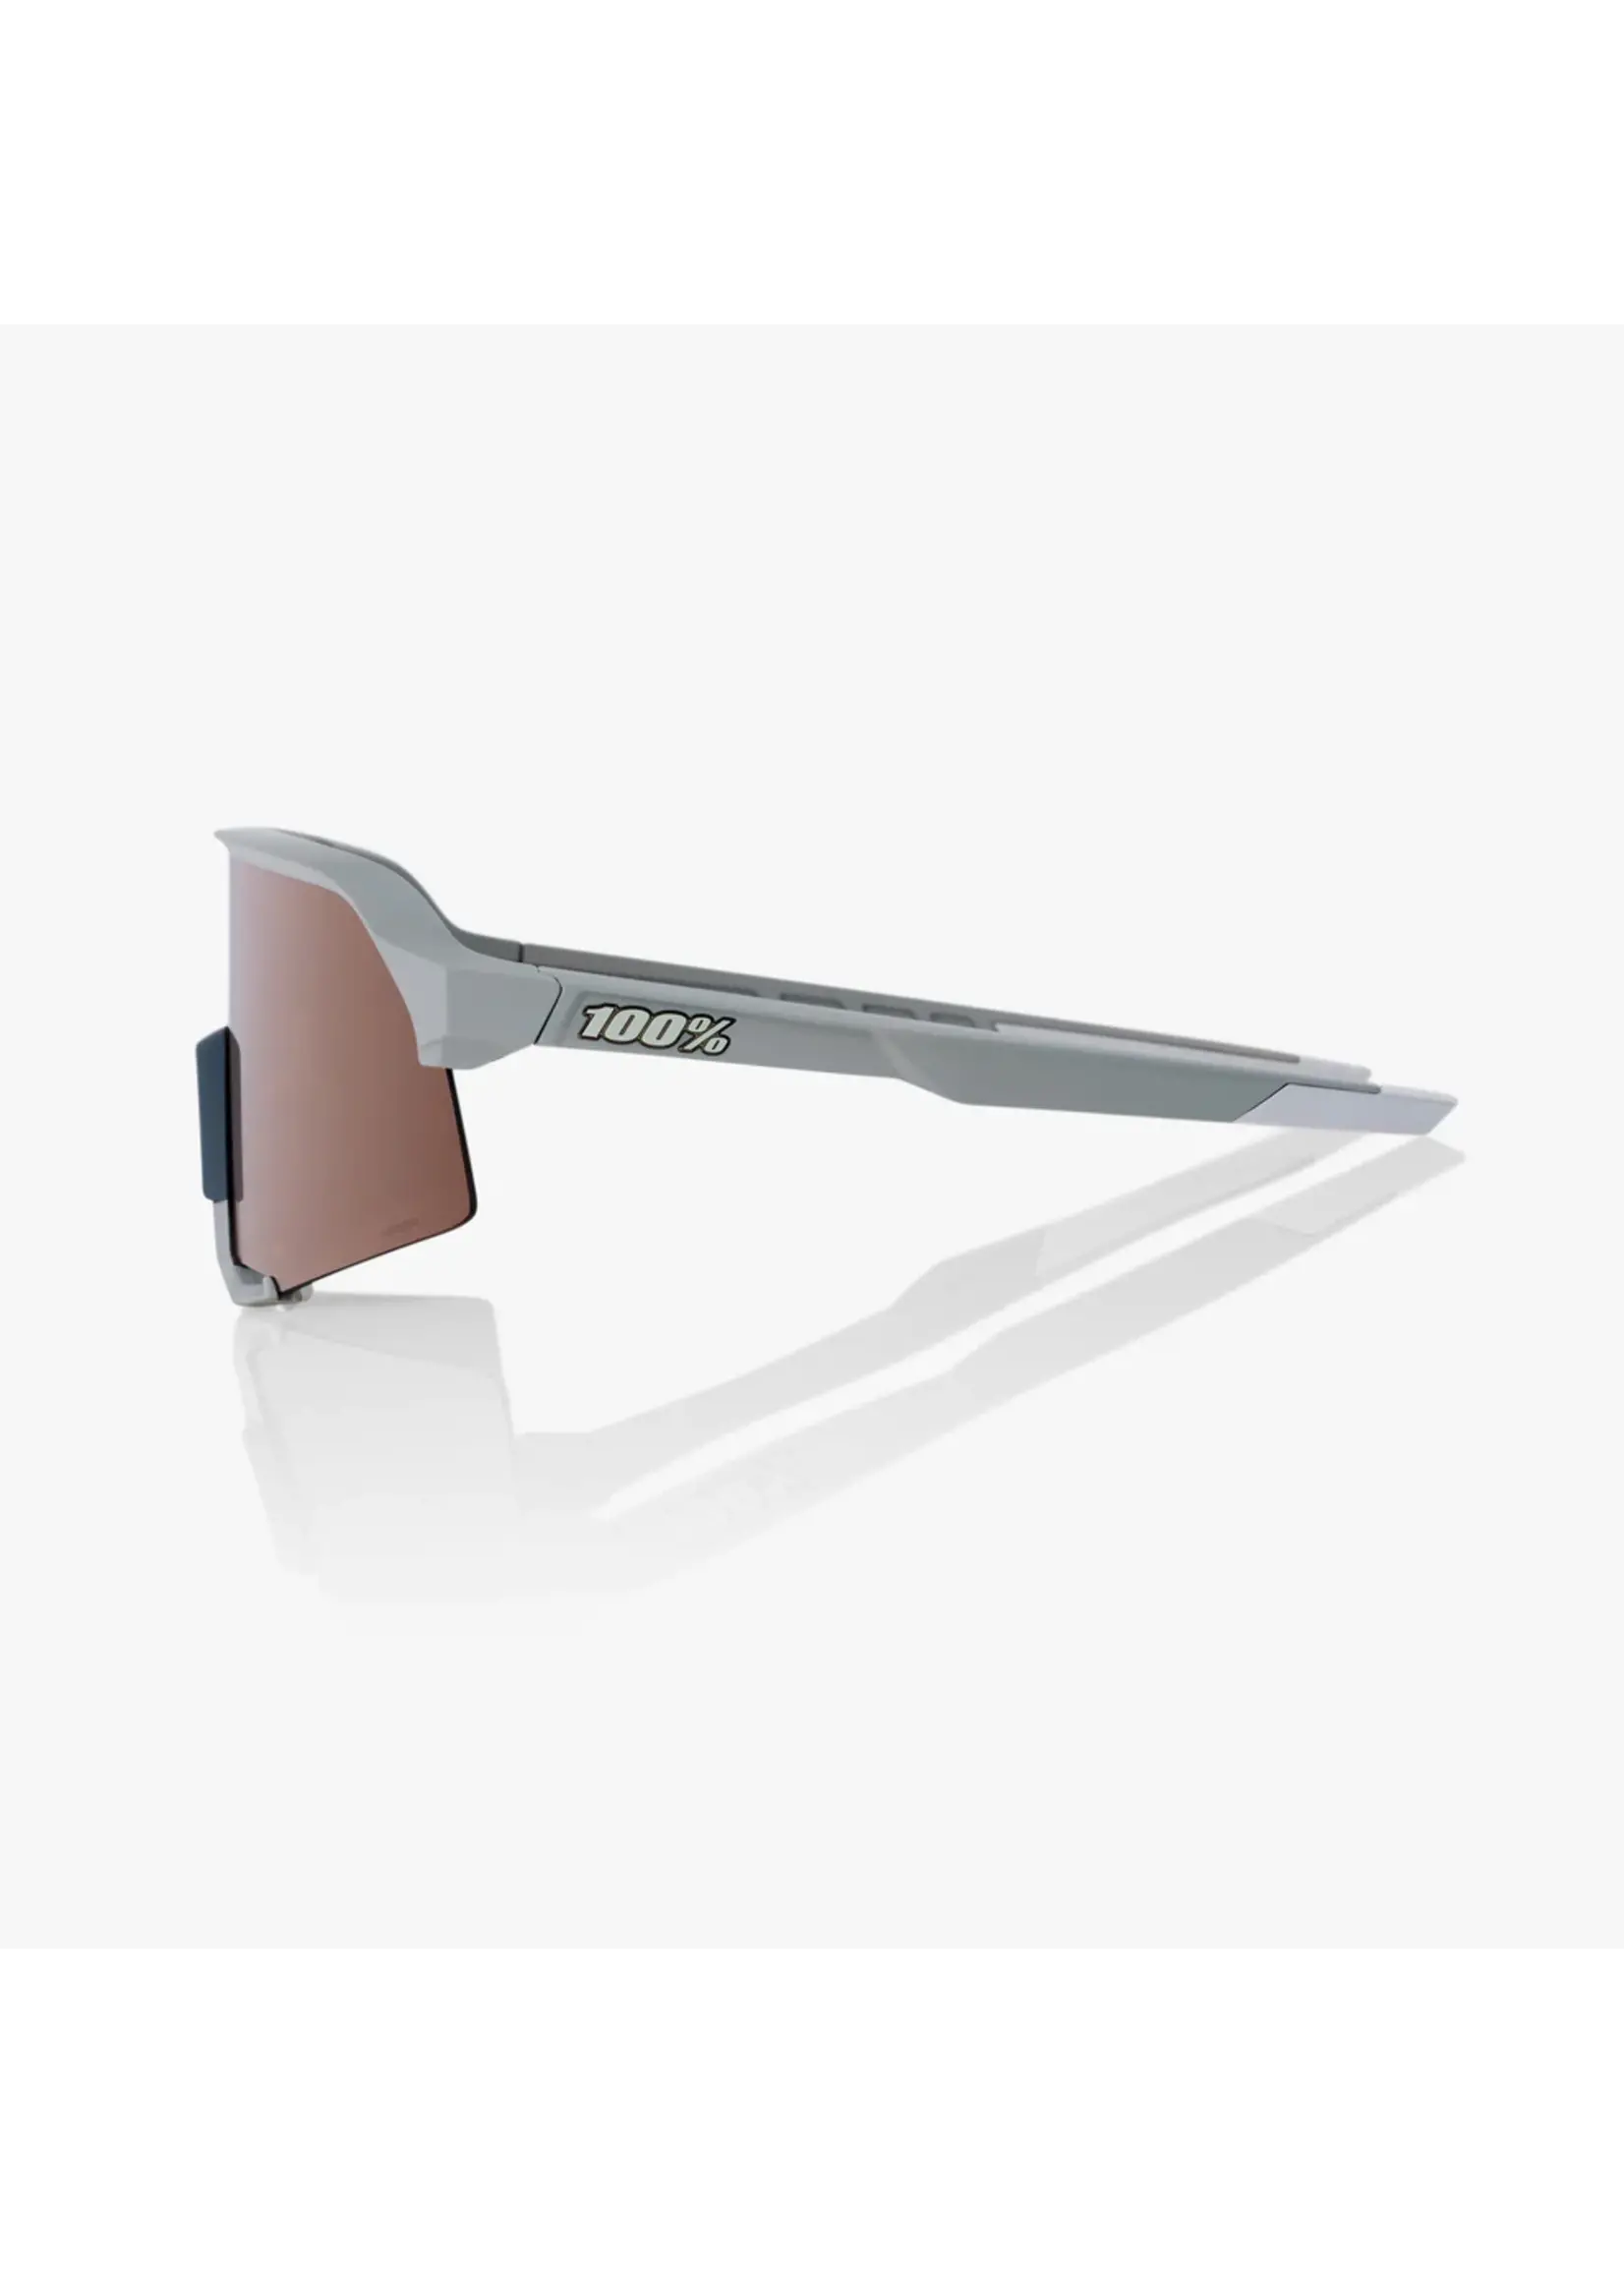 100 Percent 100% S3 Sunglasses, Soft Tact Stone Grey frame - HiPER Crimson Silver Mirror Lens